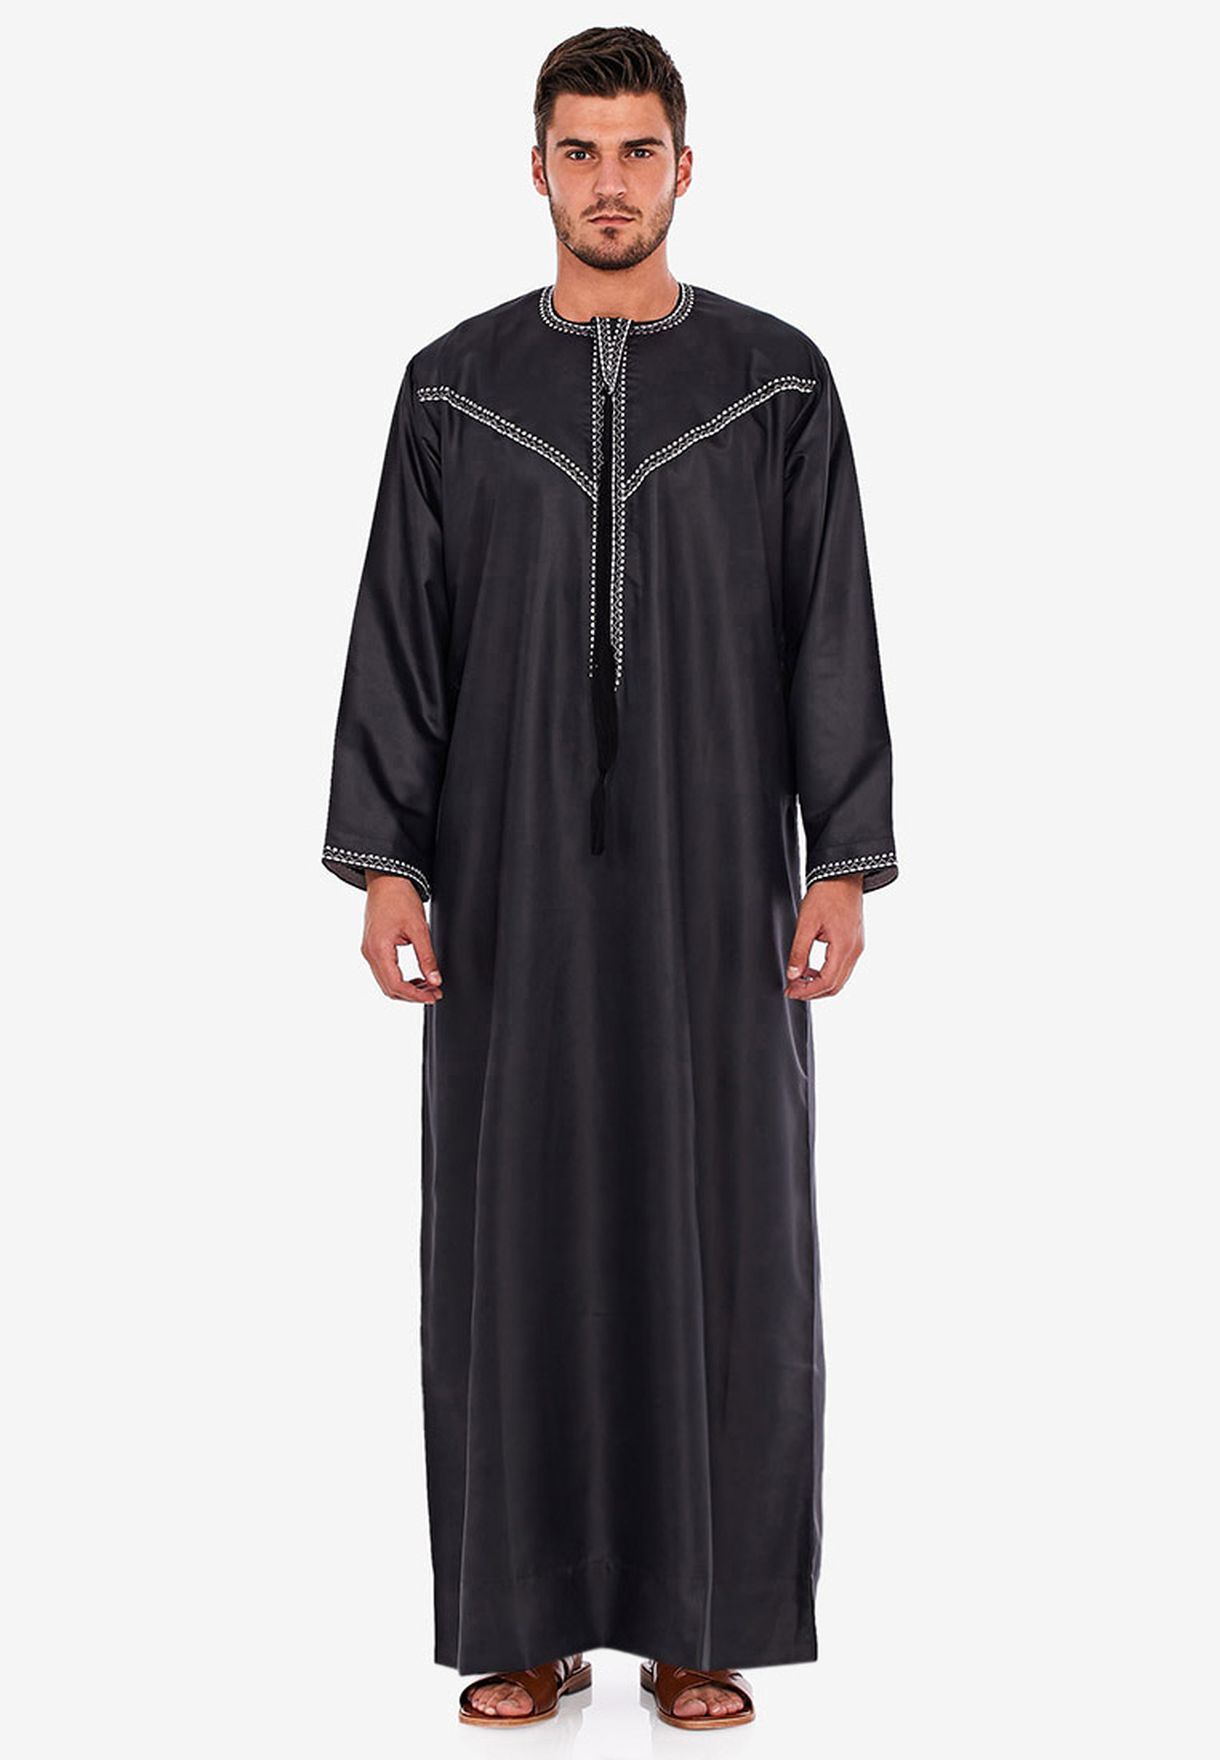 Buy black Kandoura for Men in Dubai, Abu Dhabi